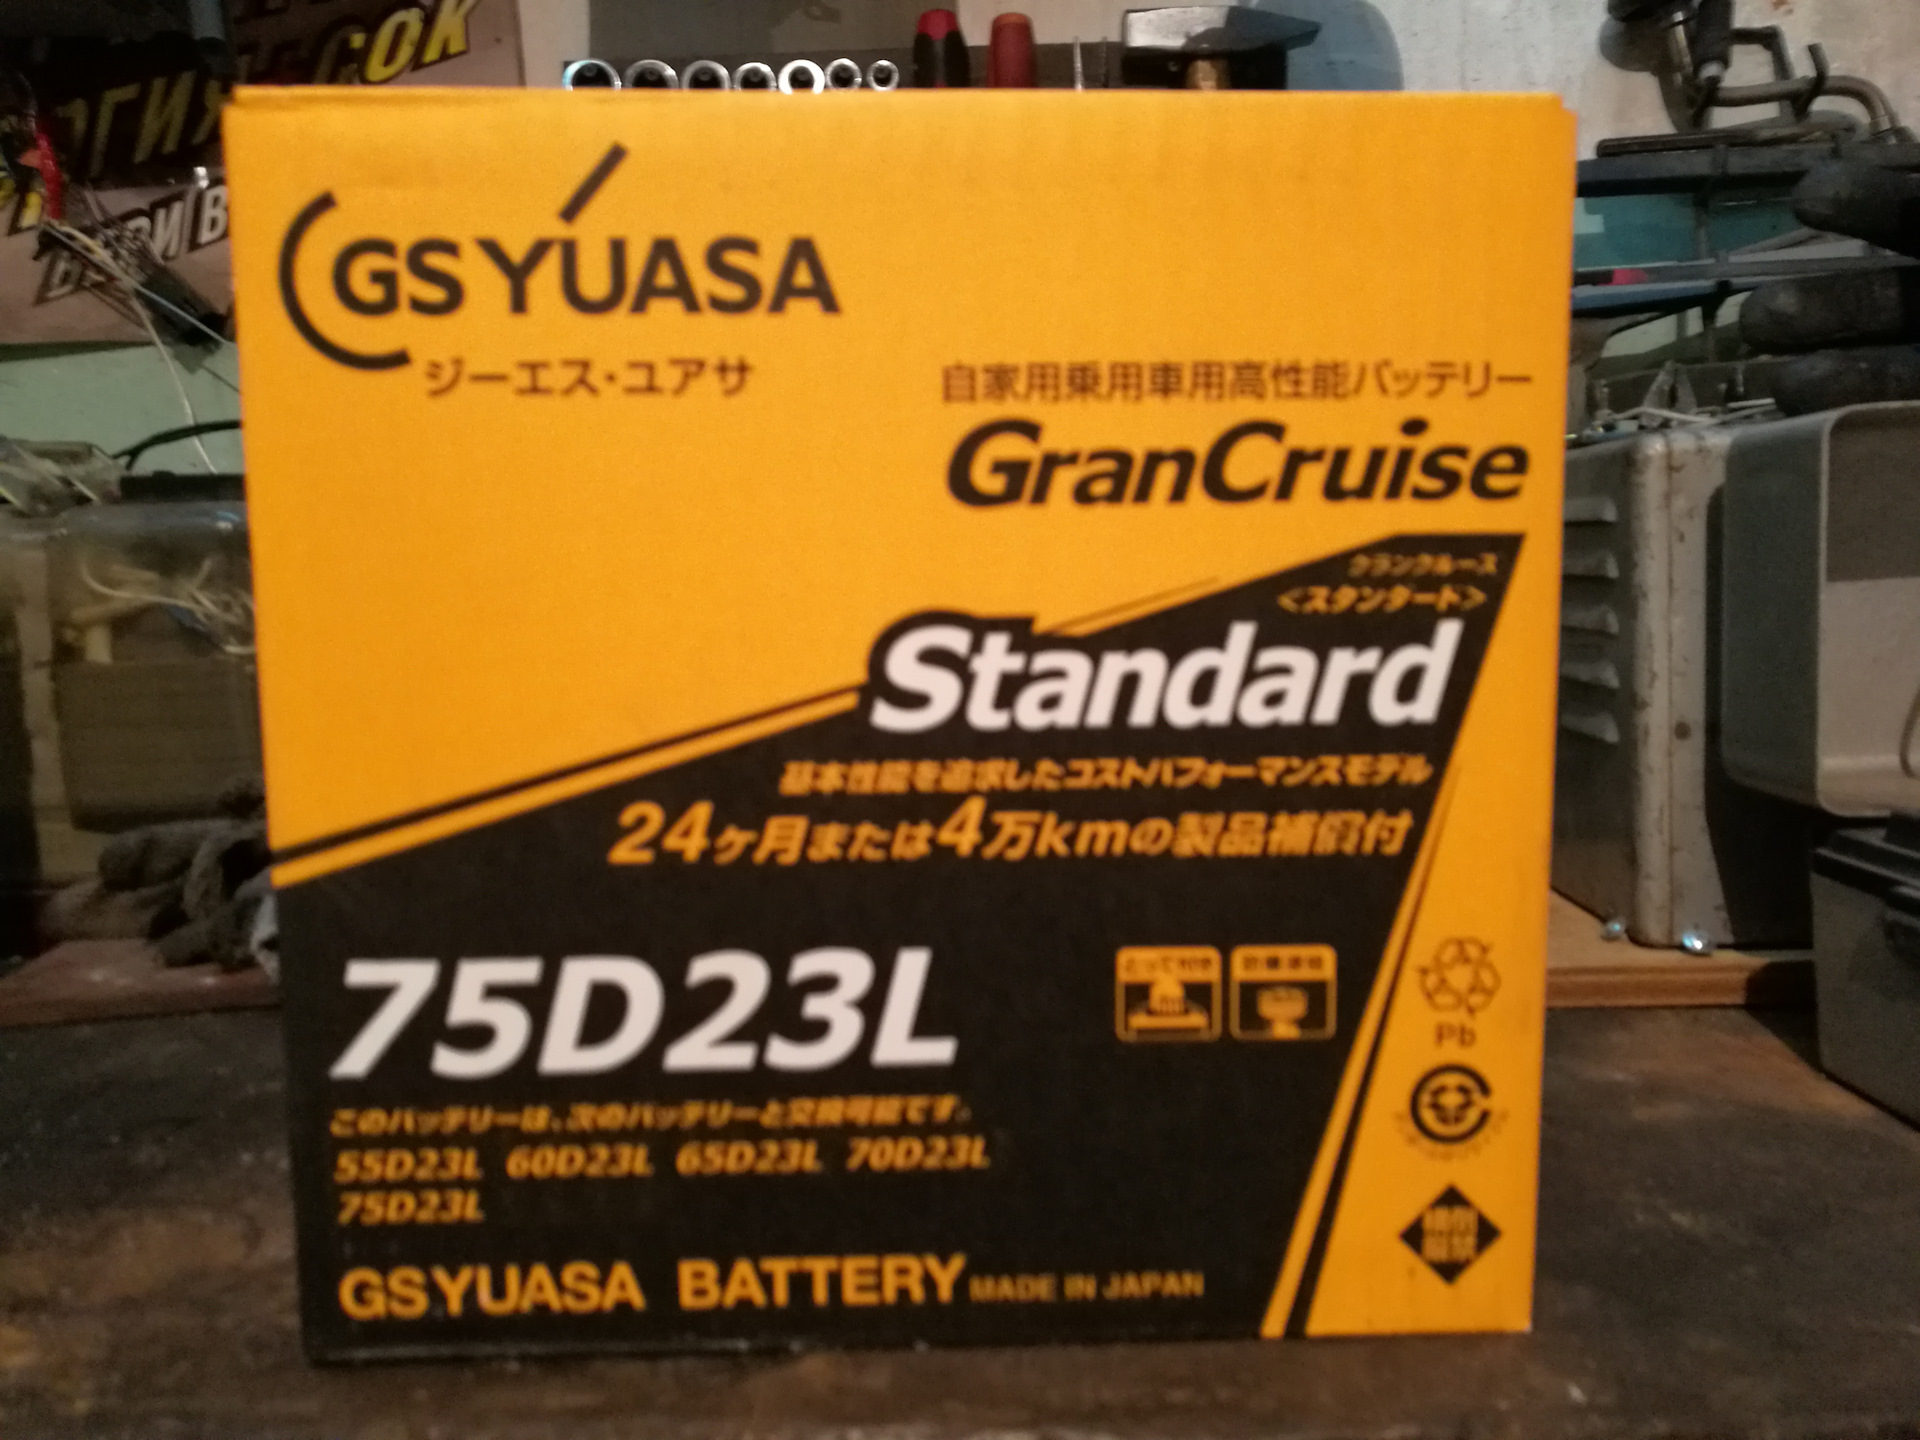 75d23l battery. GS Yuasa 55d23. GRANCRUISE Standard 75d23l аккумулятор. GS Yuasa 55d23 MF. Аккумулятор GS Yuasa GST 75d23l отзывы.